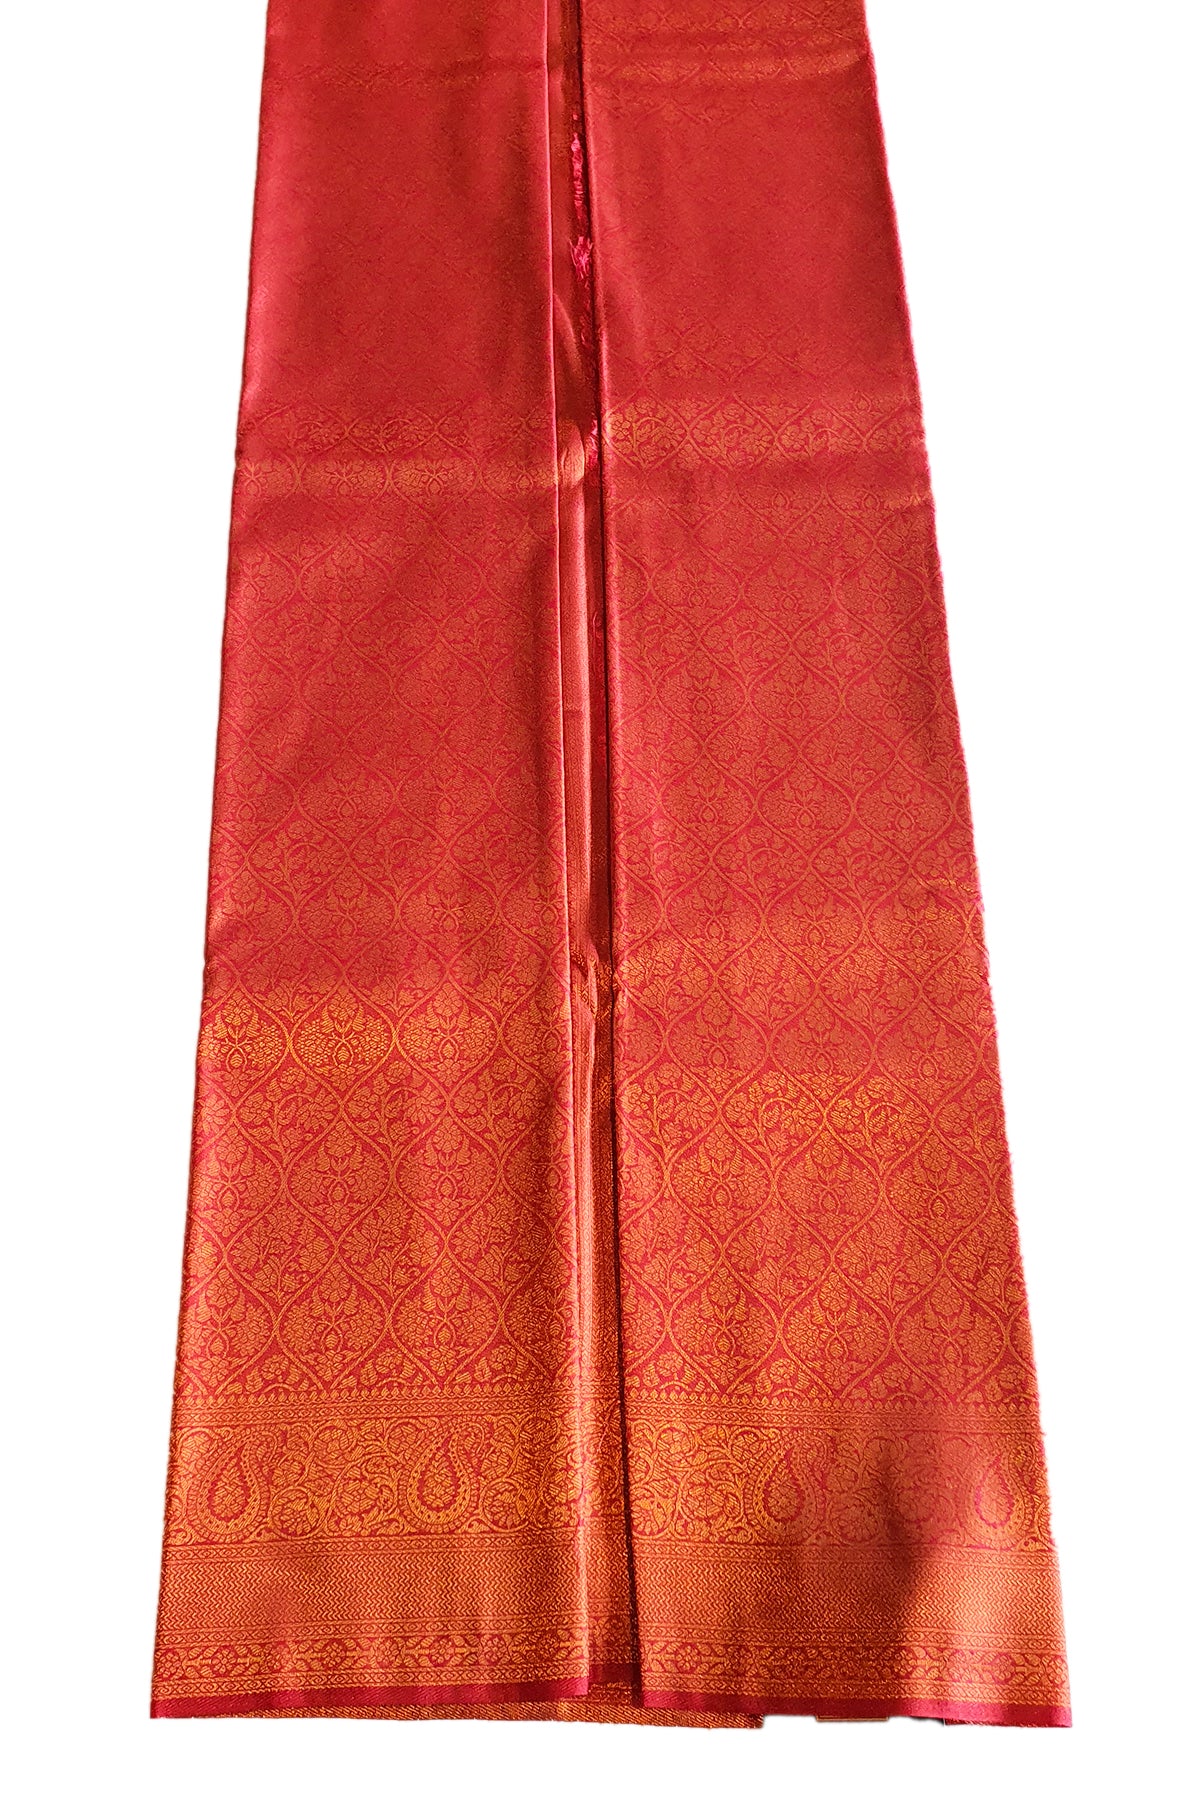 Red Blended Silk Zari Woven Saree